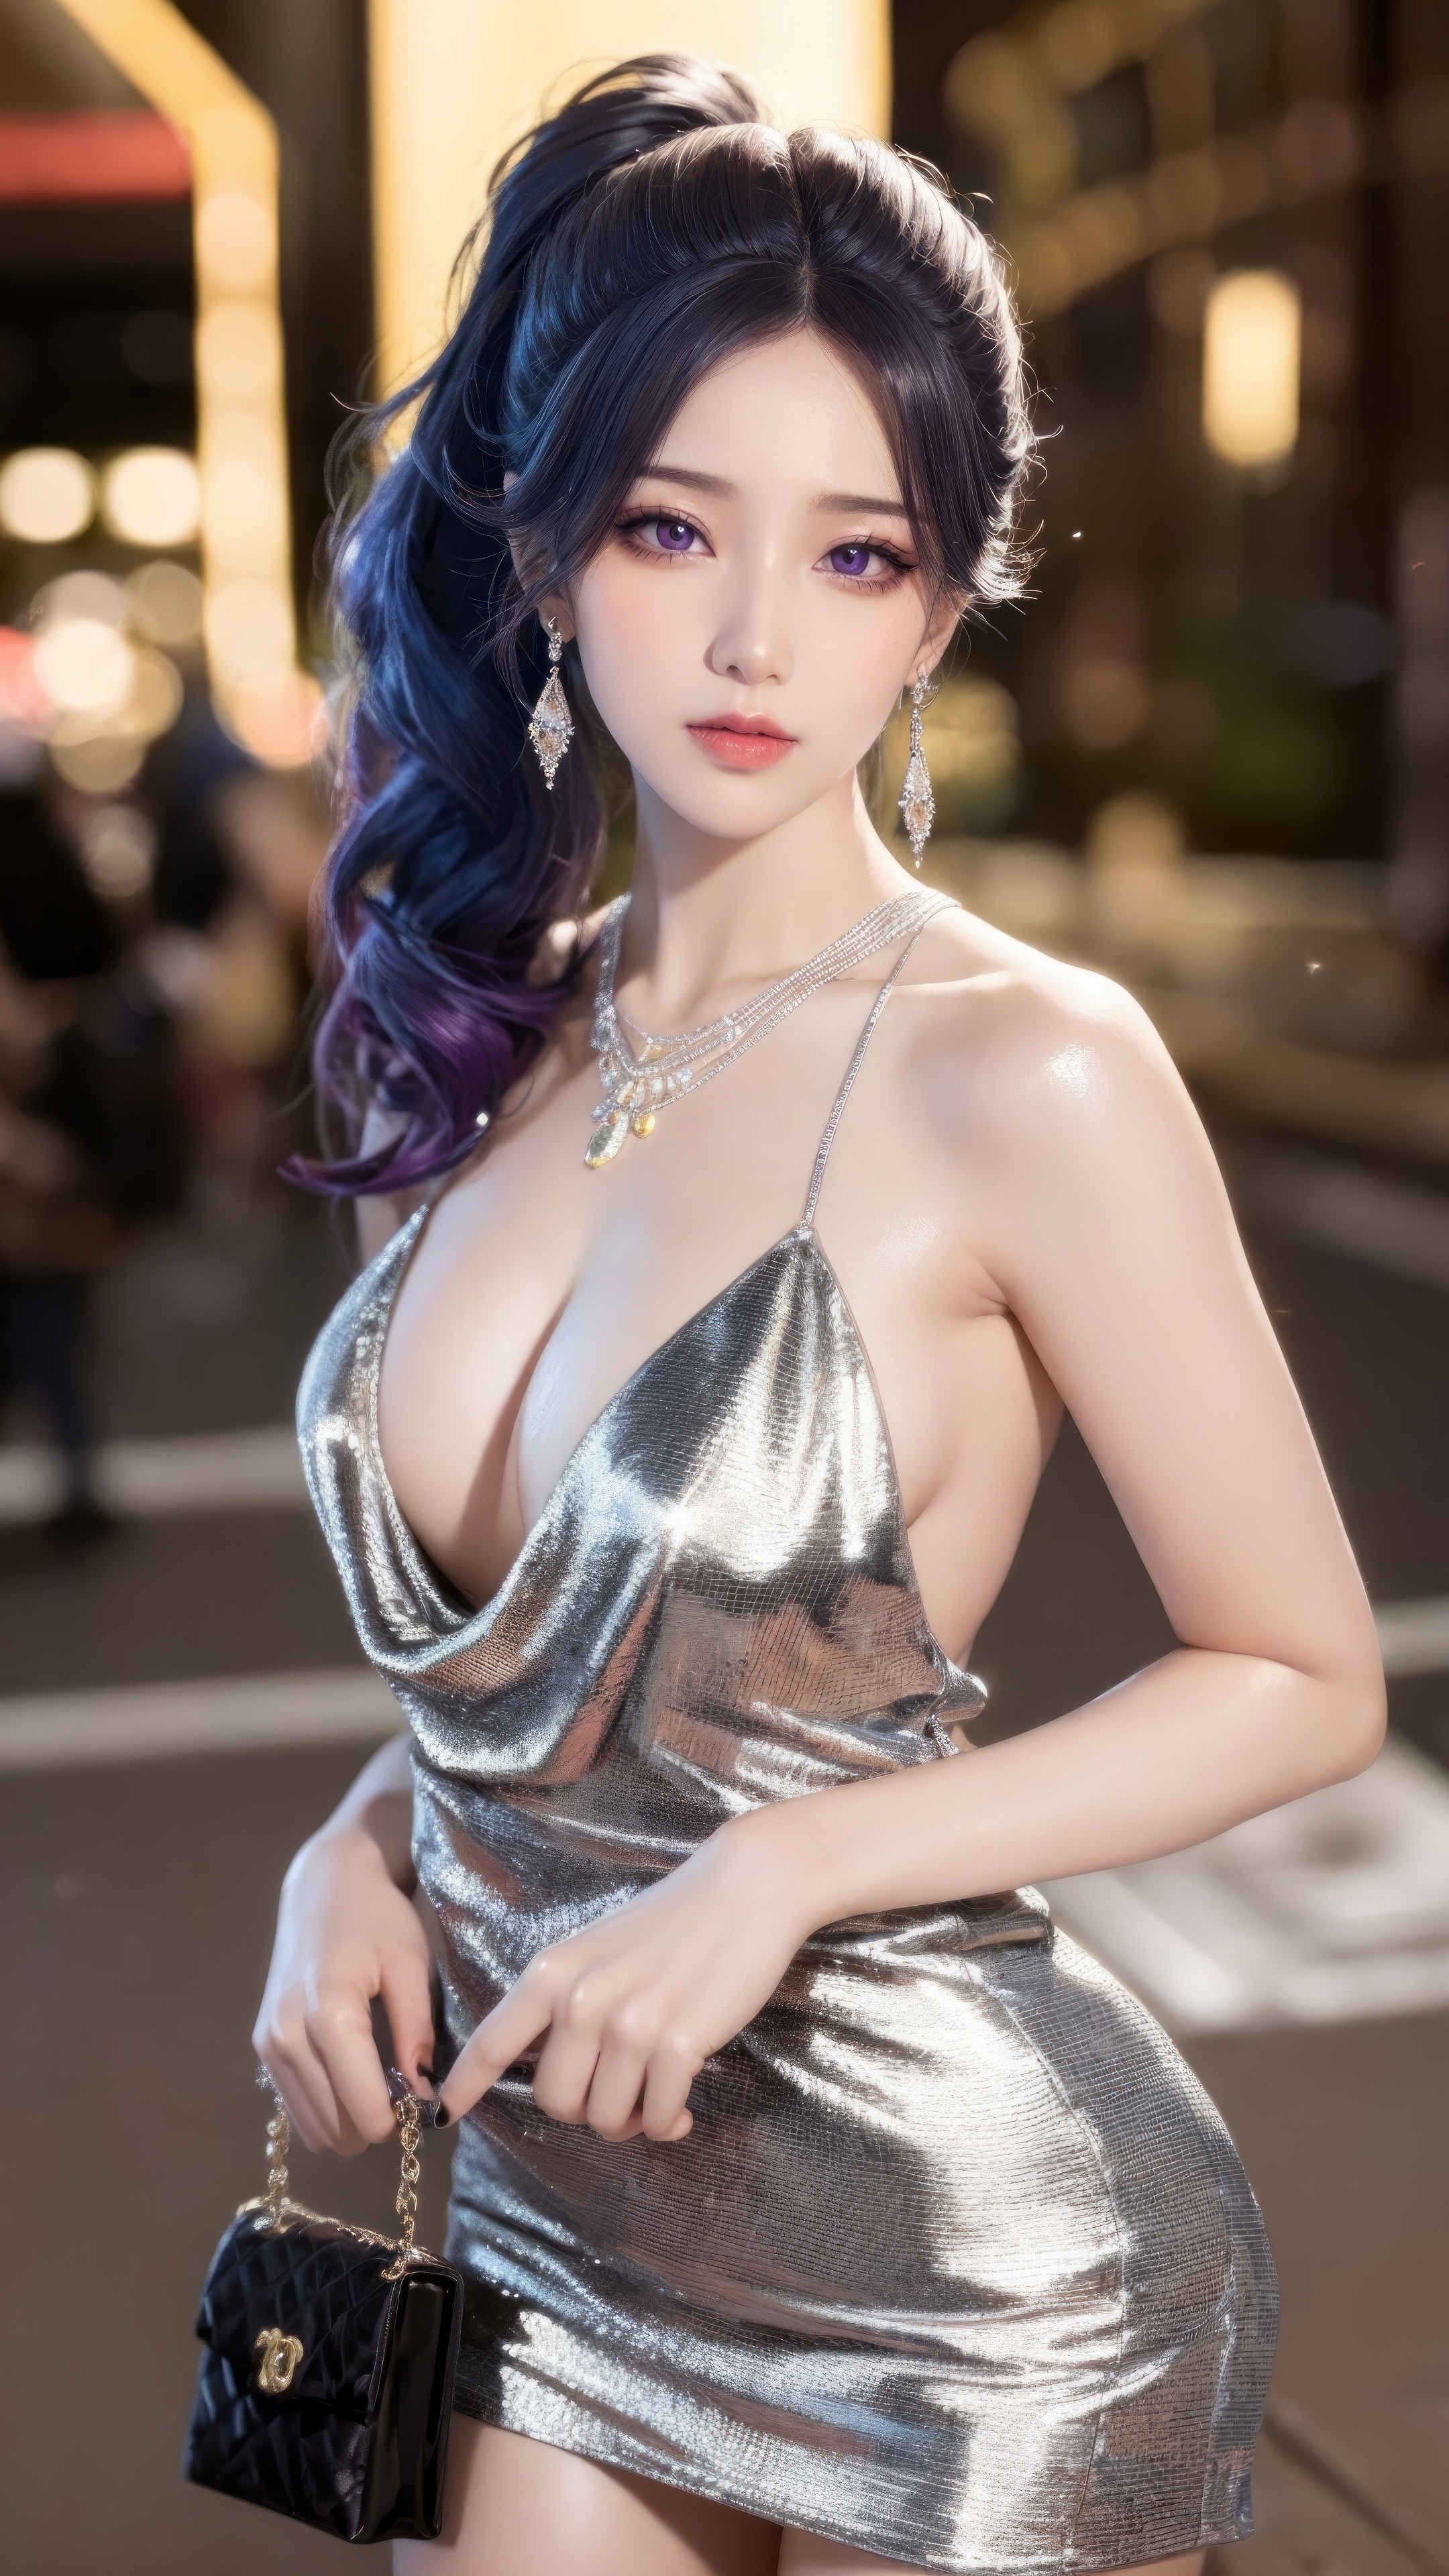 Asian girl in a glamorous dress